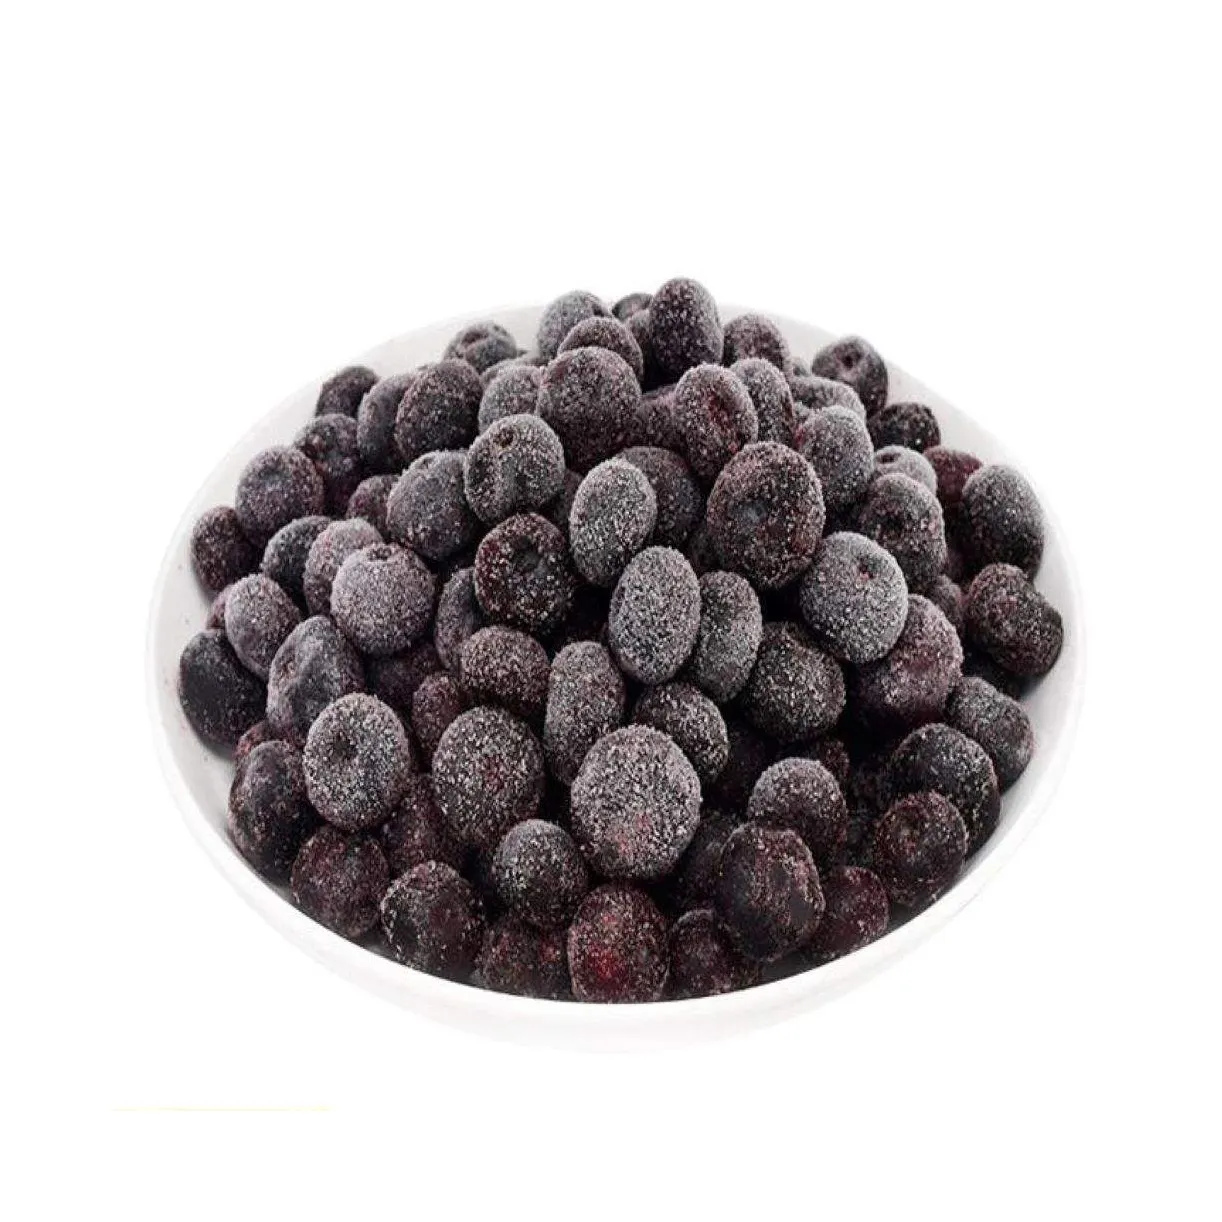 थोक आपूर्तिकर्ता सबसे अच्छी कीमत ब्लूबेरी फल जमे हुए ifq ब्लूबेरी जमे हुए ब्लूबेरी थोक निर्माता